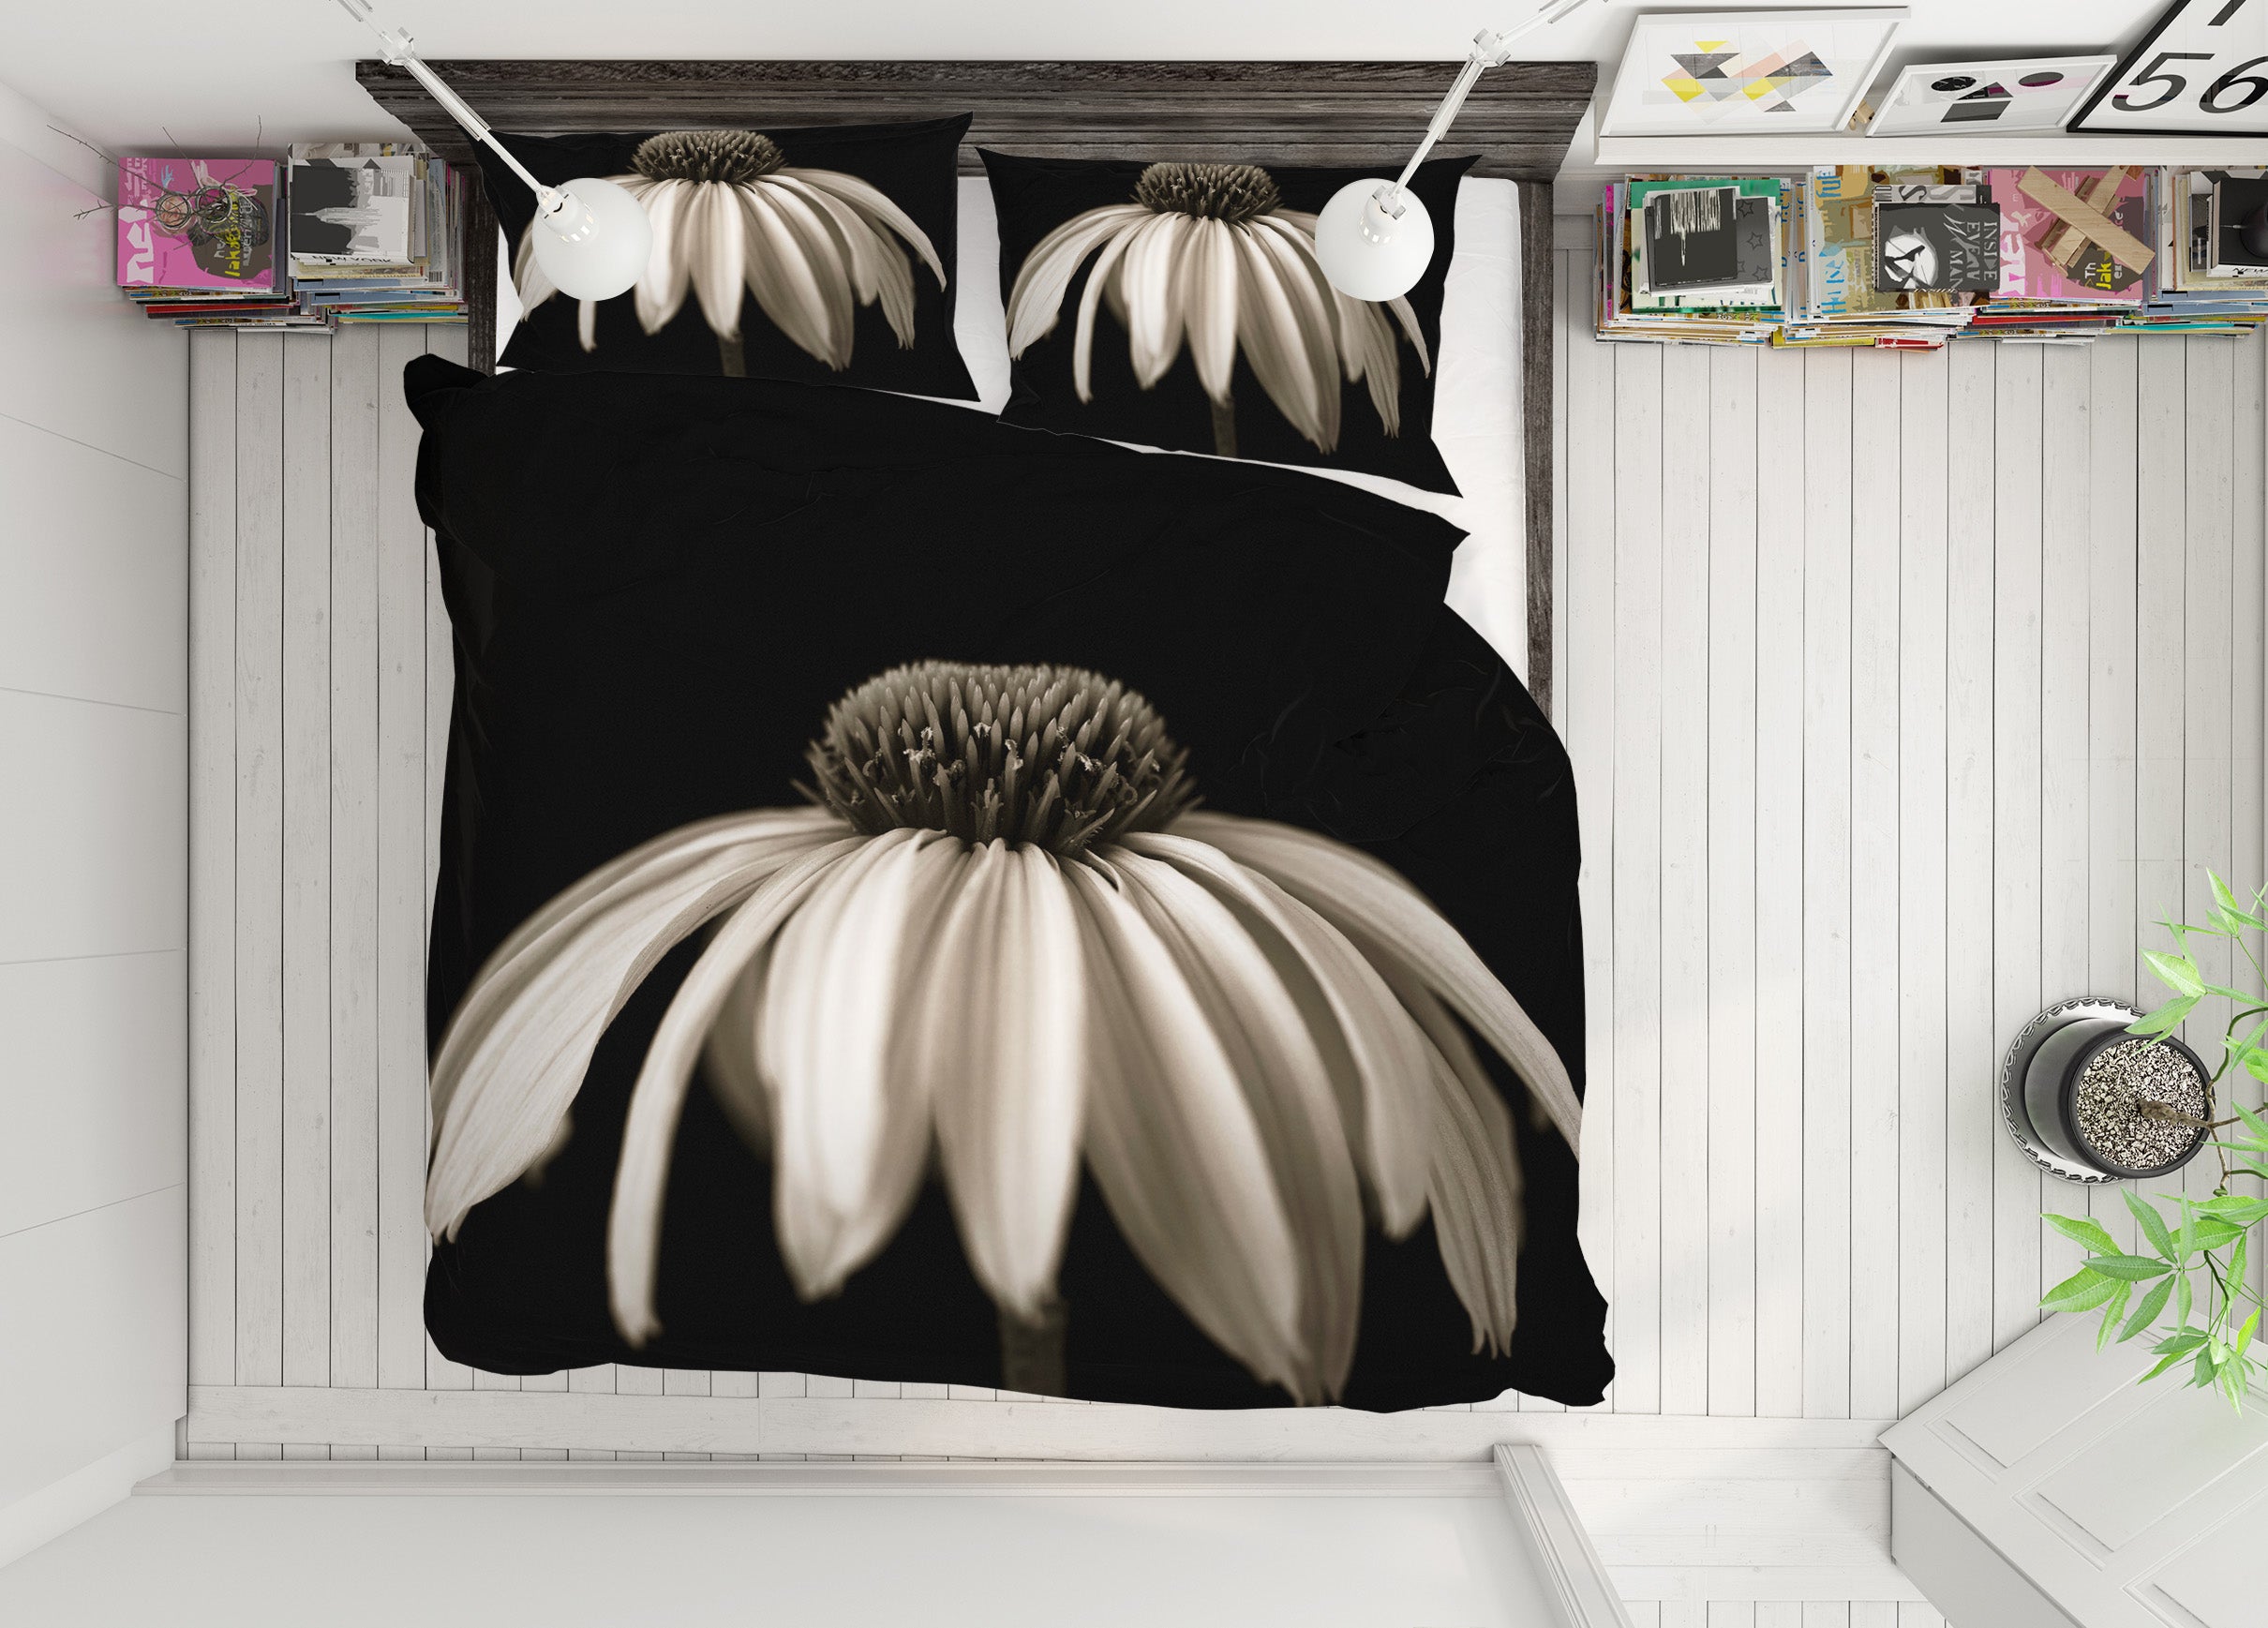 3D Artistic Petal 7102 Assaf Frank Bedding Bed Pillowcases Quilt Cover Duvet Cover